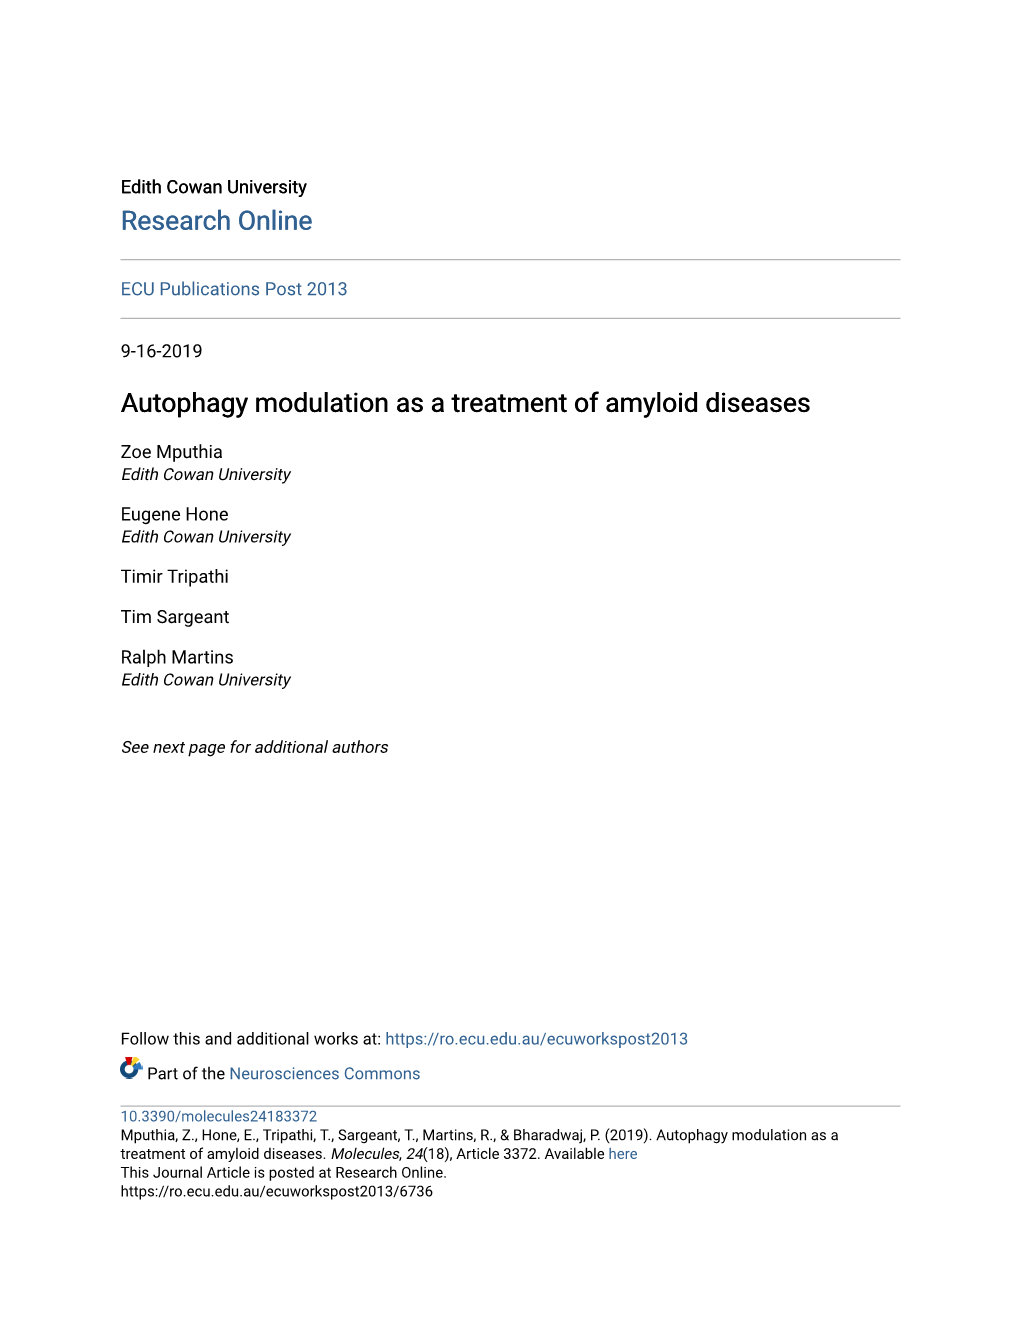 Autophagy Modulation As a Treatment of Amyloid Diseases